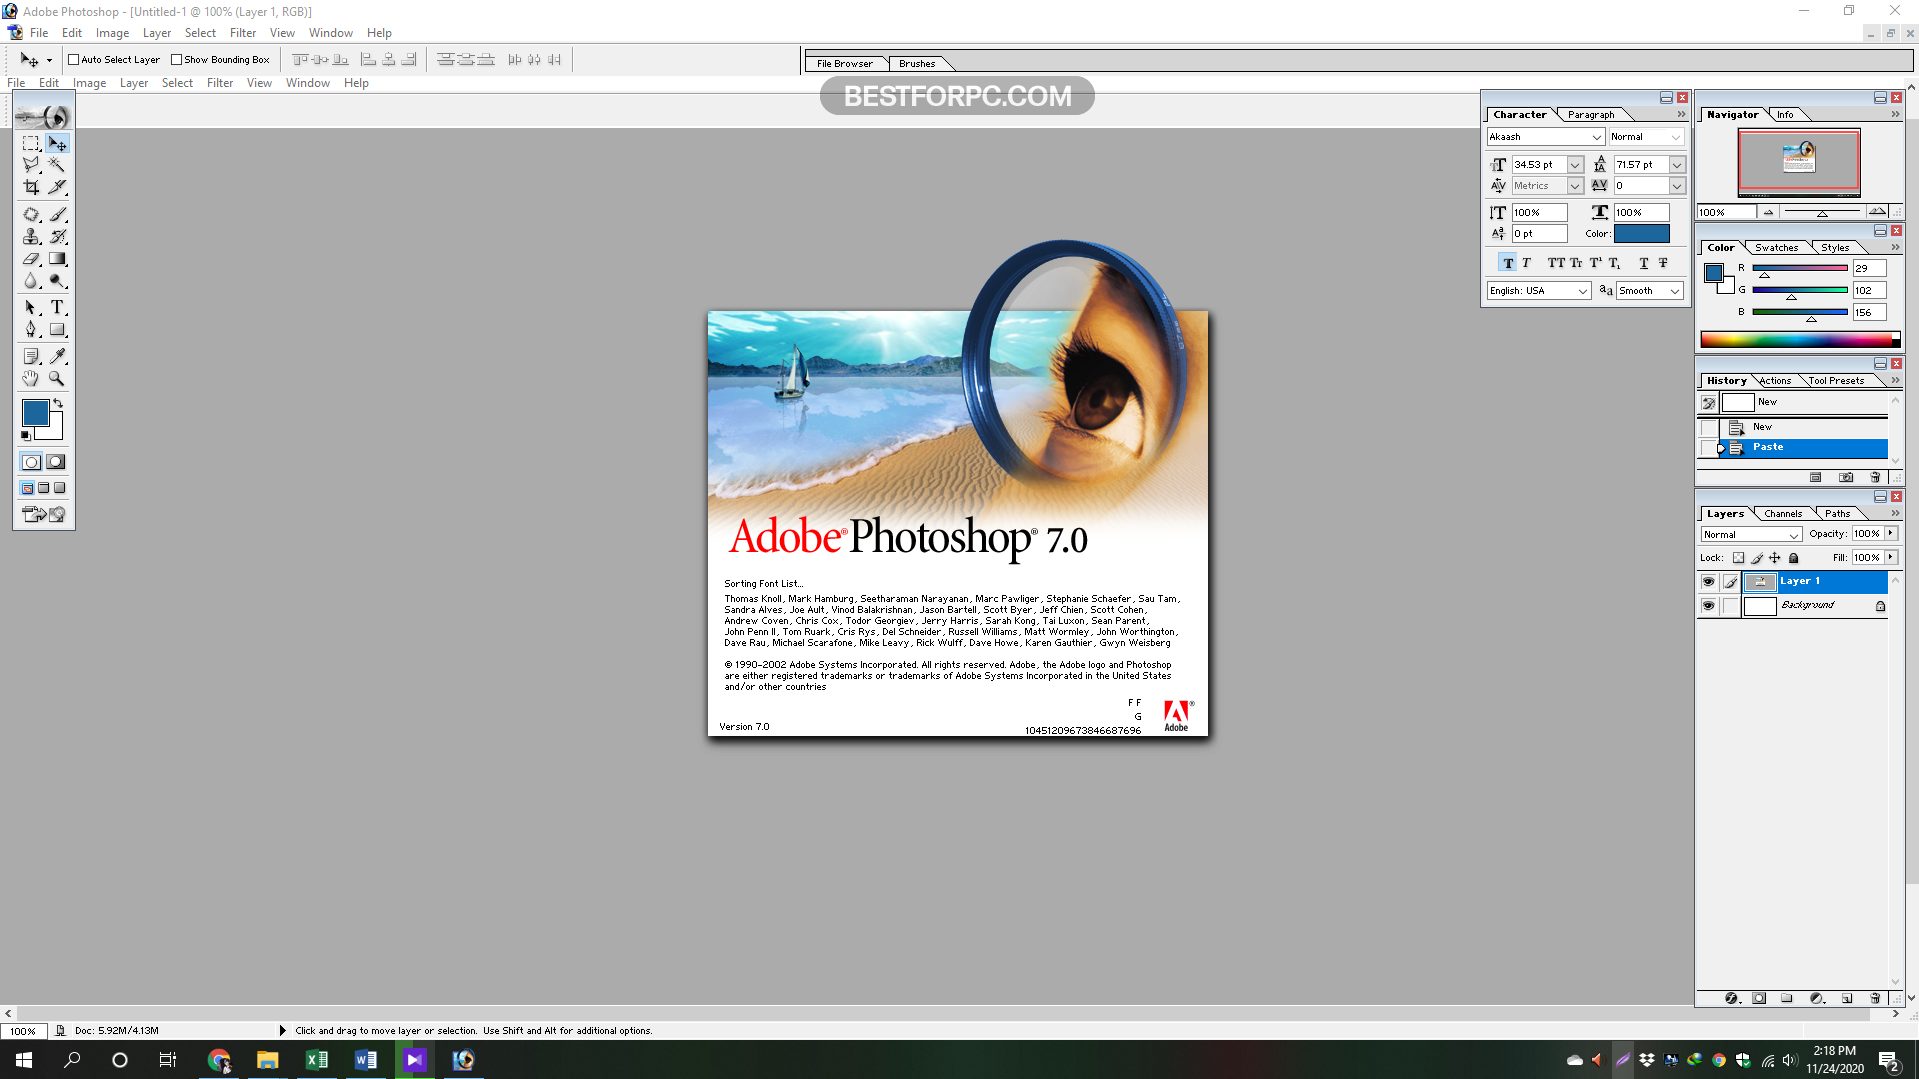 adobe photoshop 7.0 software free download windows 8